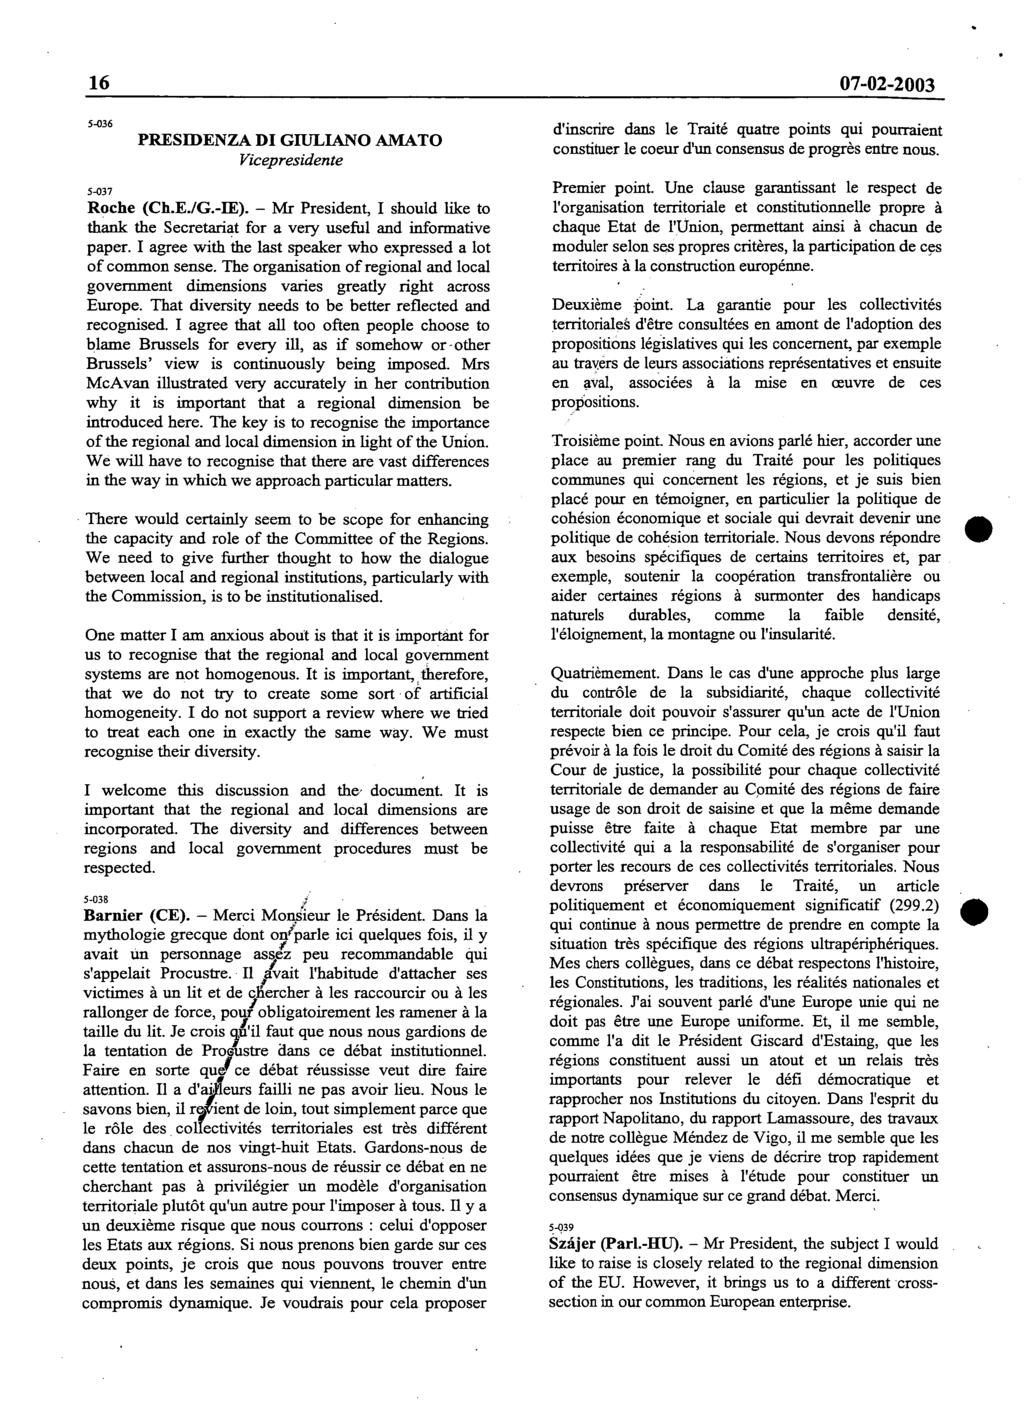 16 07-02-2003 PRESIDENZA DI GIULIANO AMATO Vicepresidente 5-037 Roche (Ch.E./G.-IE). - Mr President, I should like to thank the Secretariat for a very useful and informative paper.